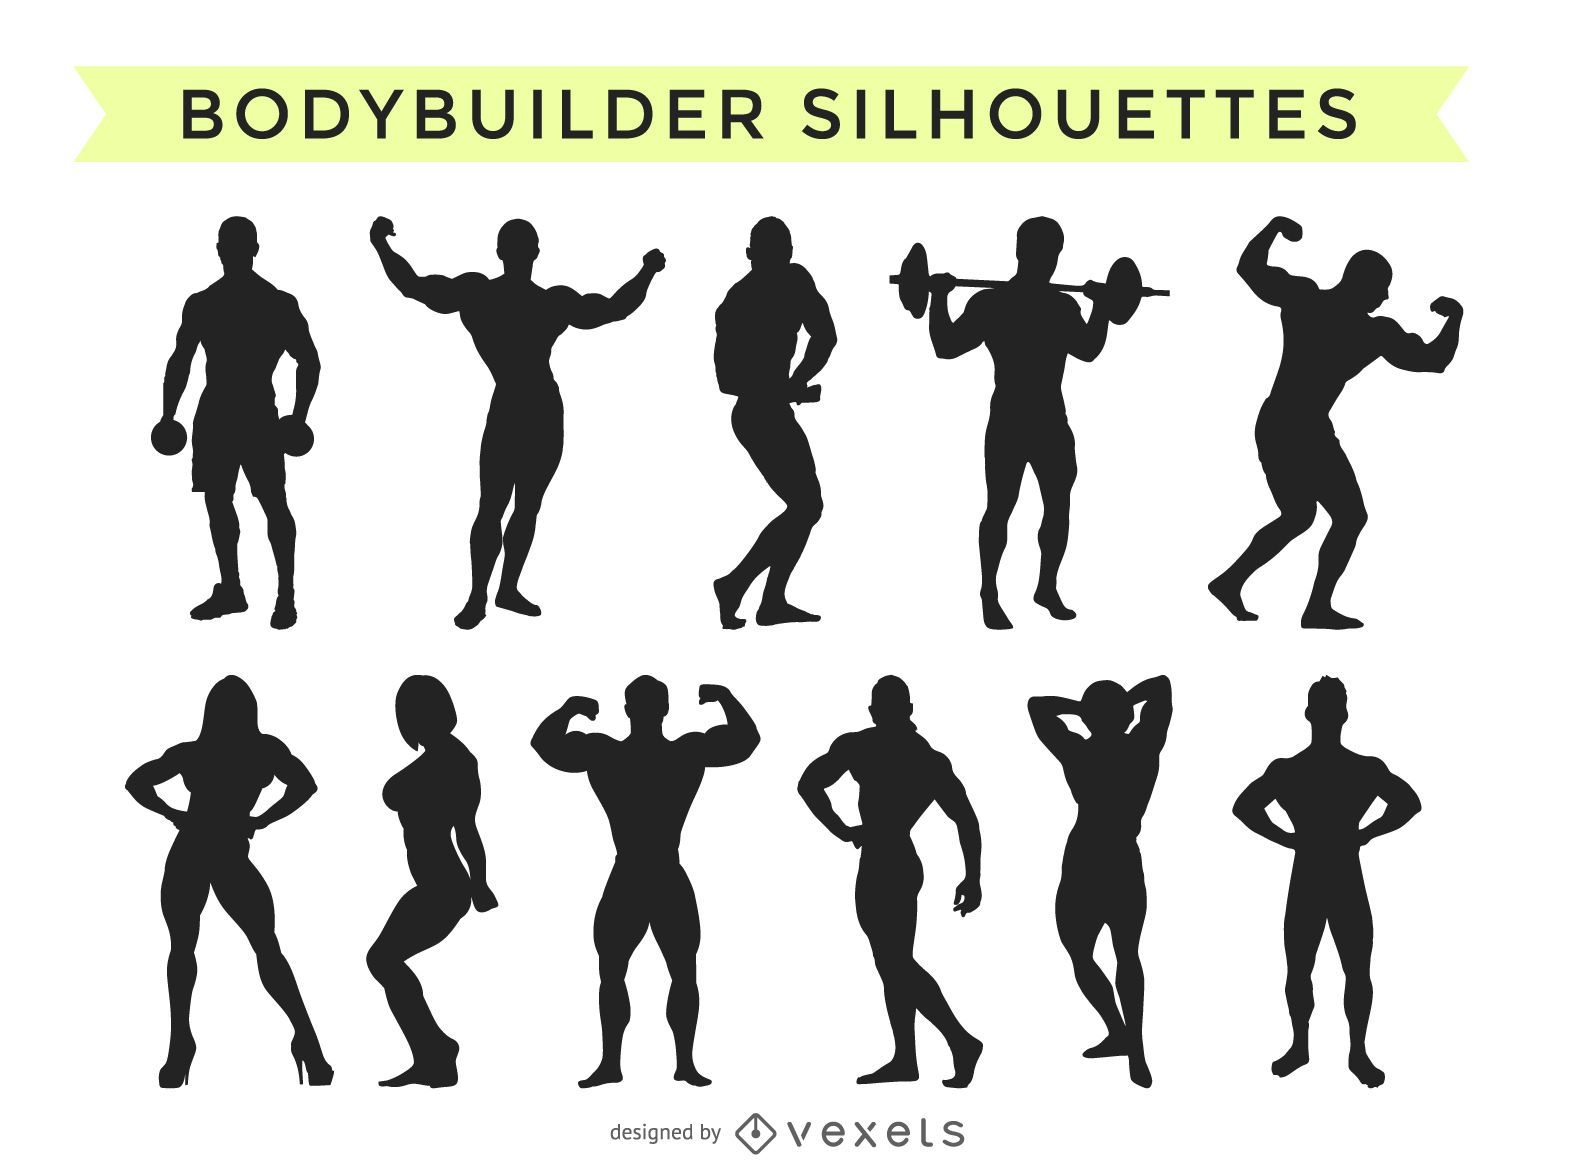 Bodybuilder silhouette collection